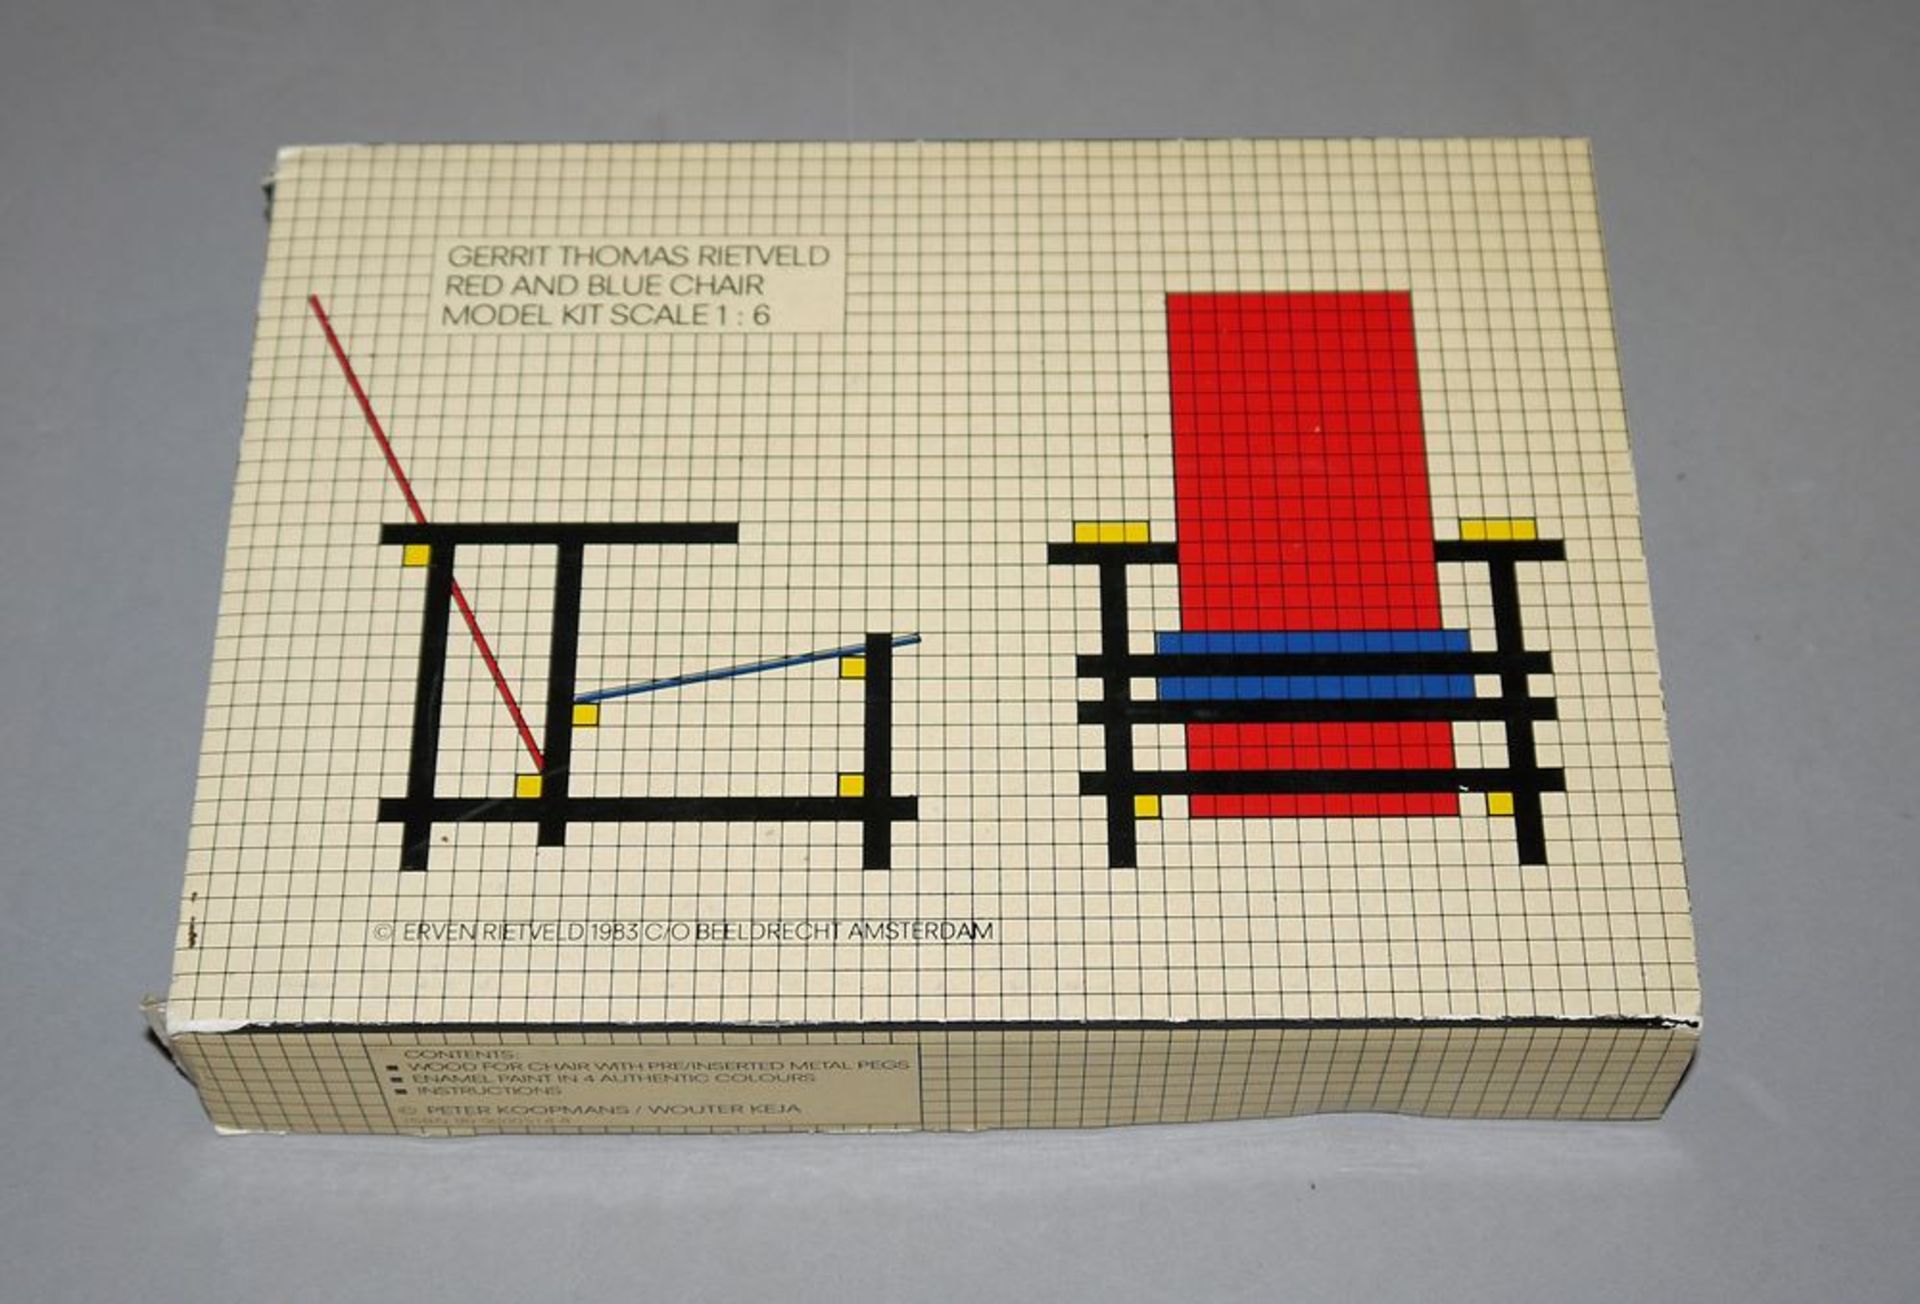 Gerrit Thomas Rietveld, Red and Blue Chair Model Kit Scale 1:6, Originalkarton